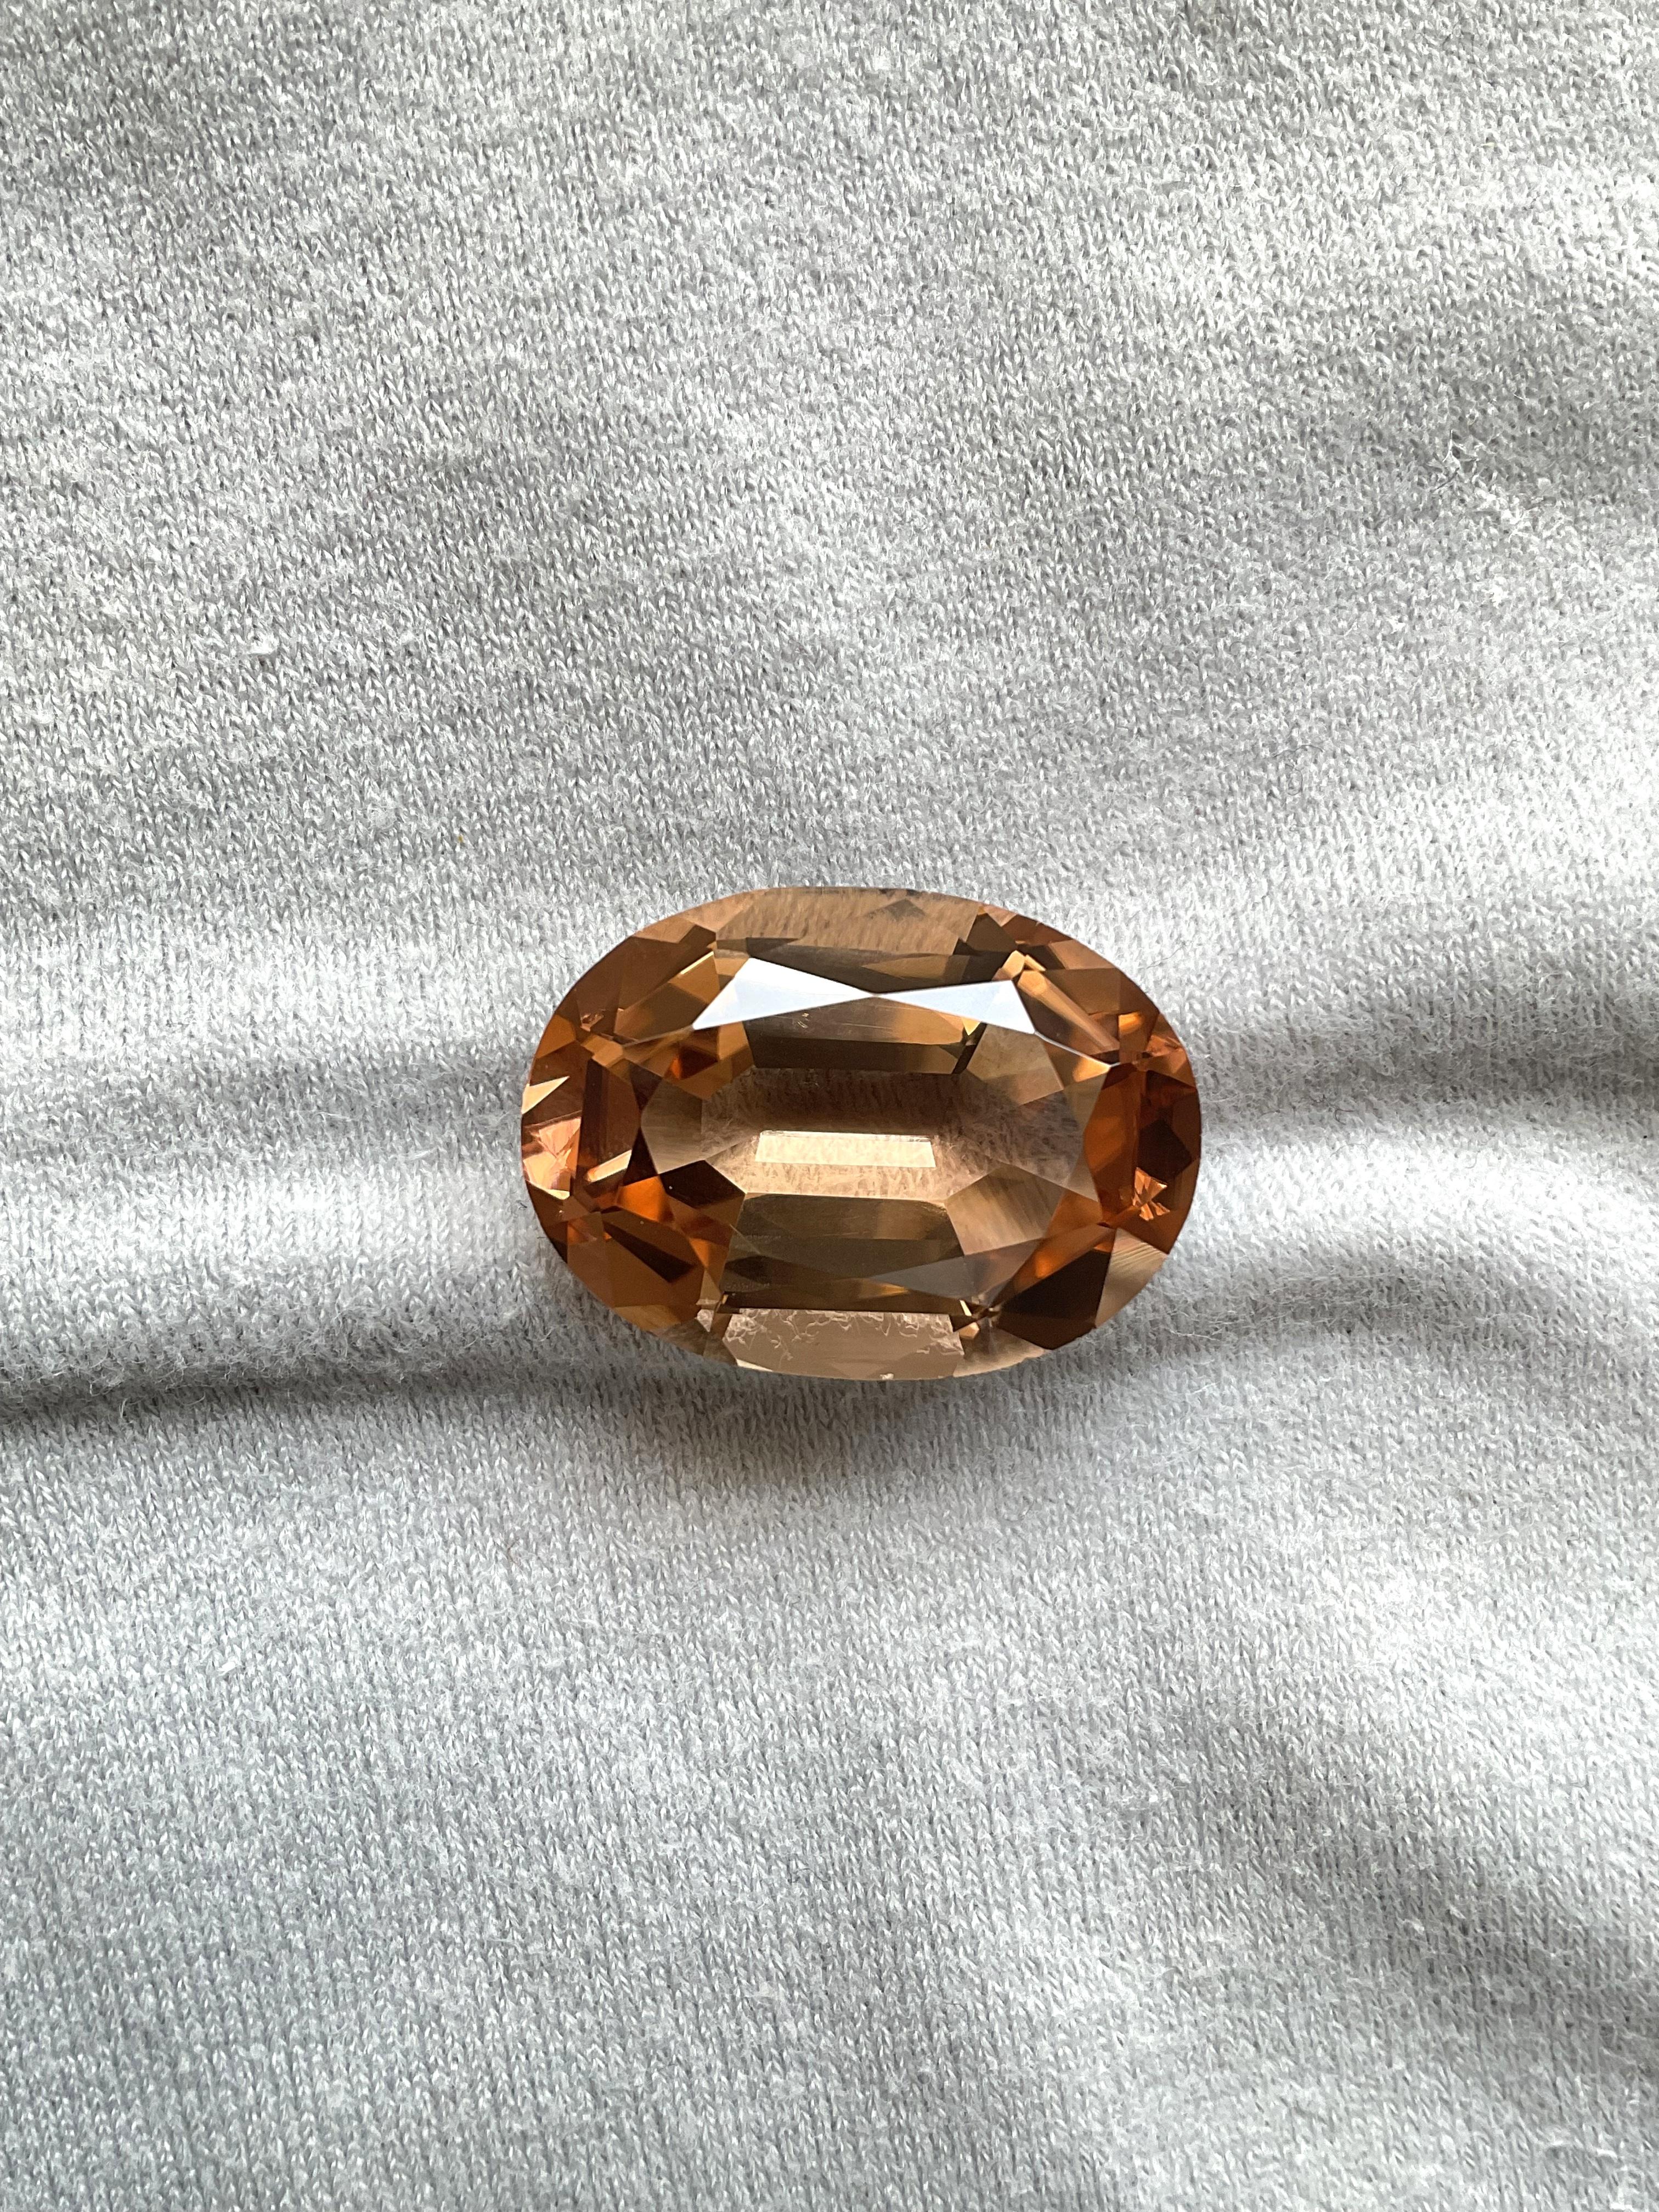 33.37 Carats Top Quality Tourmaline Oval Cut Stone Fine Jewelry Natural Gemstone Unisexe en vente